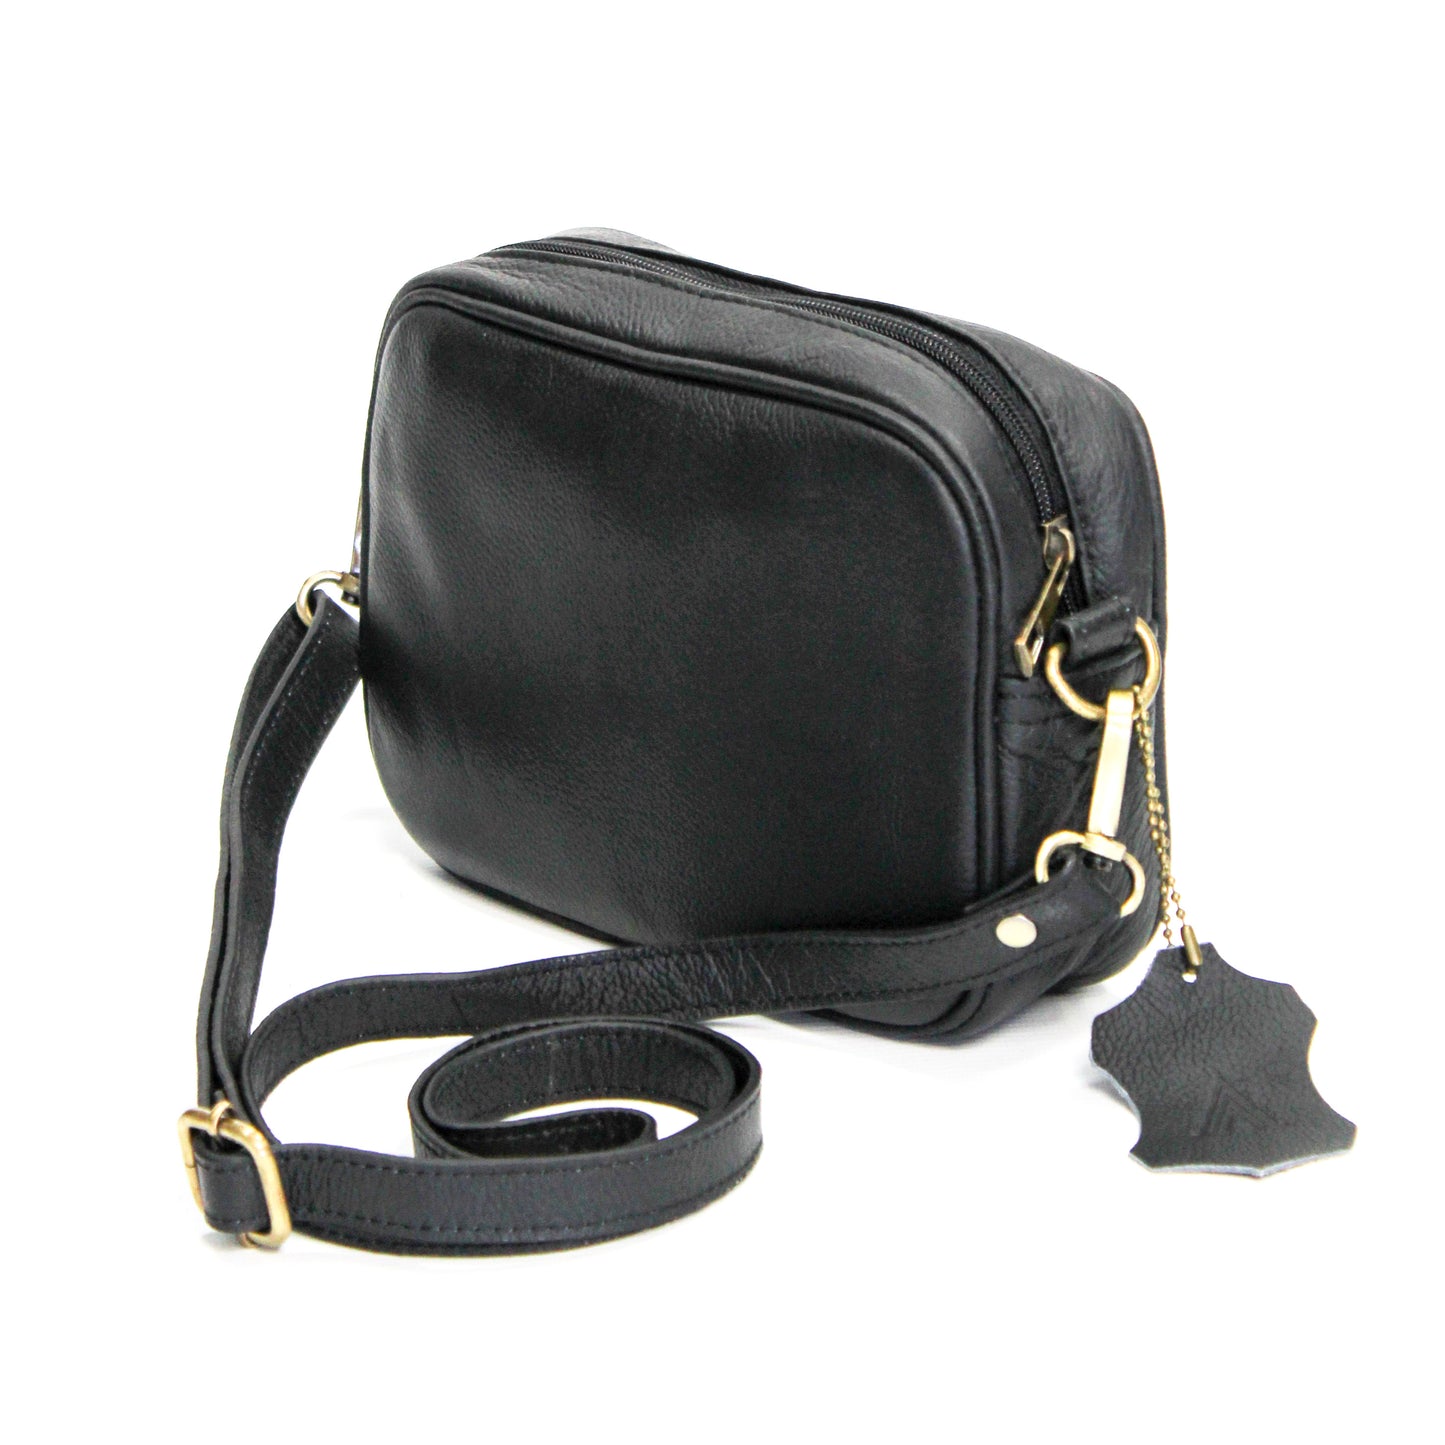 Pebbled Black Leather Camera Bag